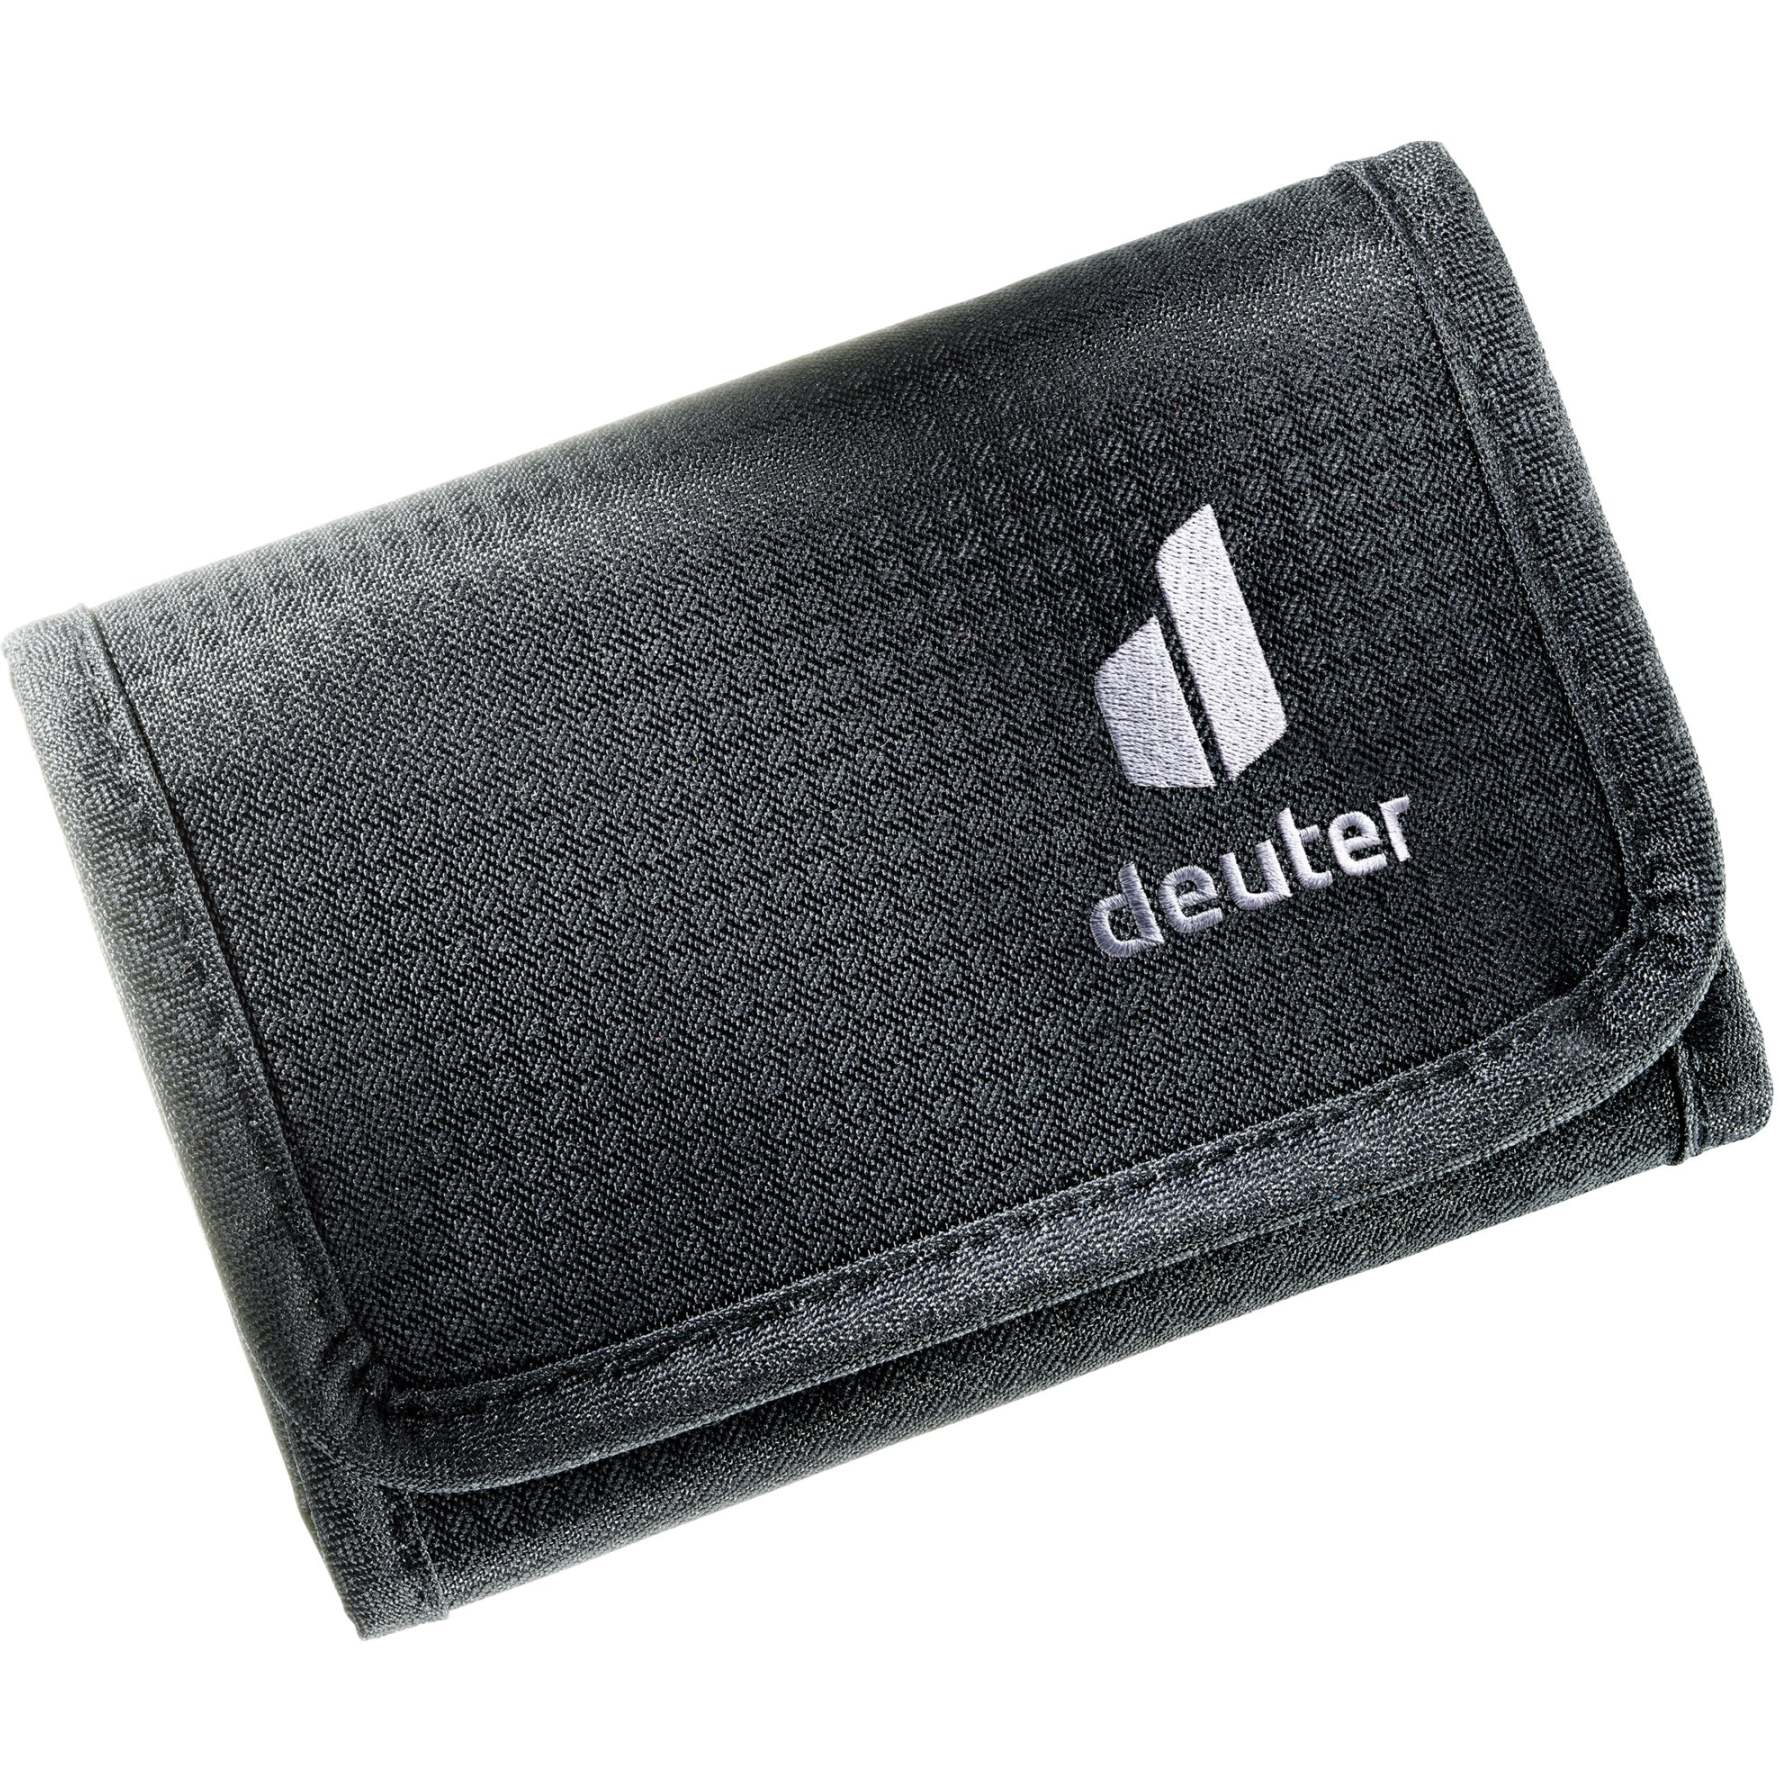 Picture of Deuter Travel Wallet - black